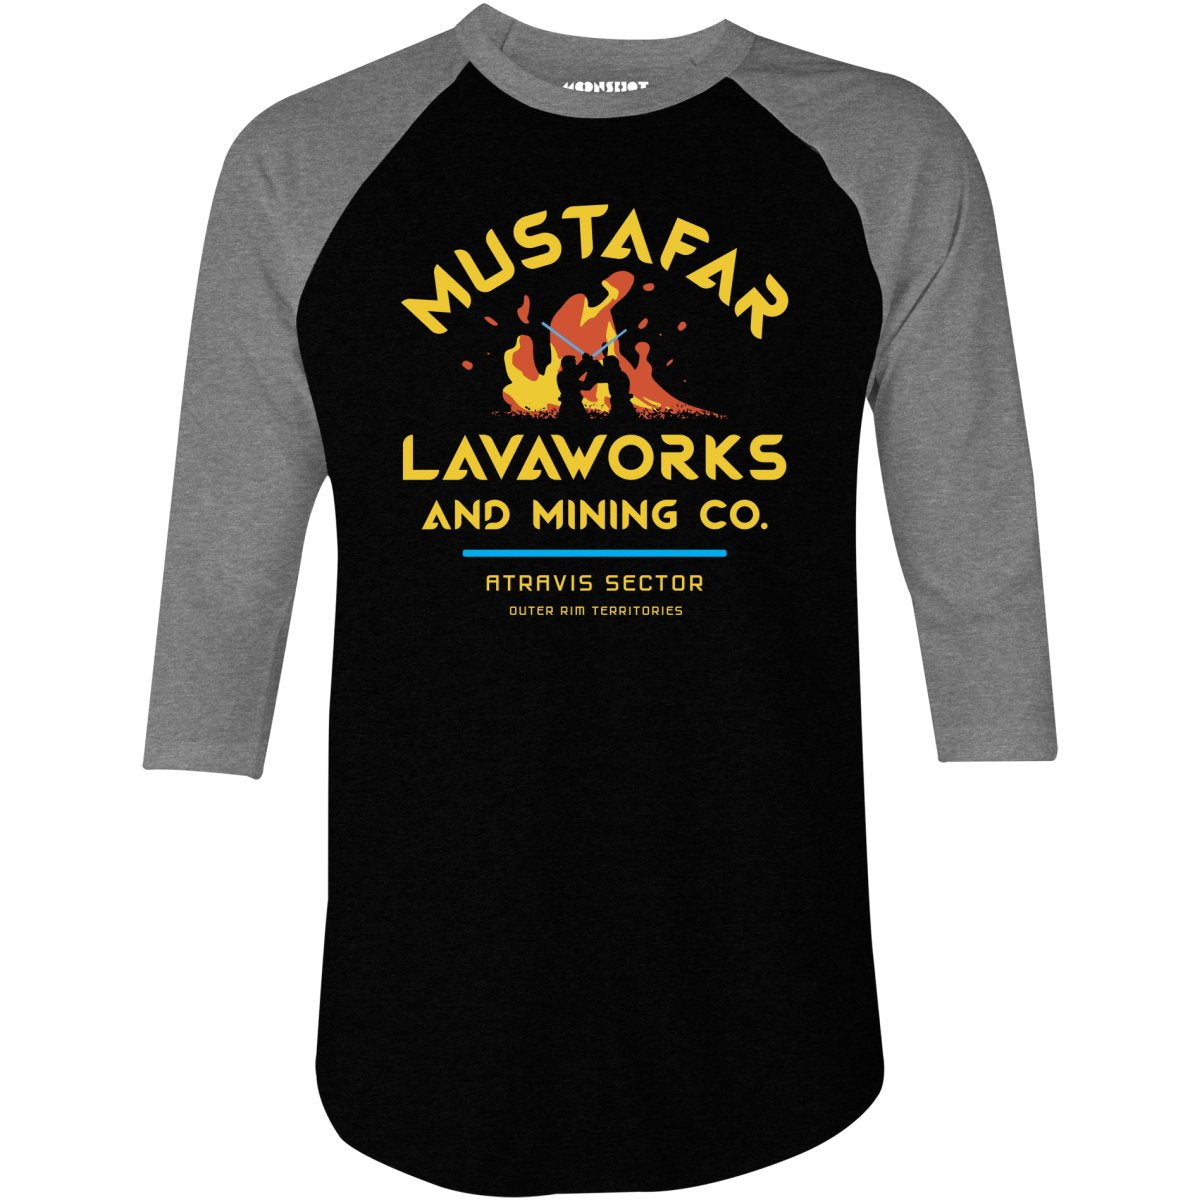 Mustafar Lavaworks and Mining Co - 3/4 Sleeve Raglan T-Shirt